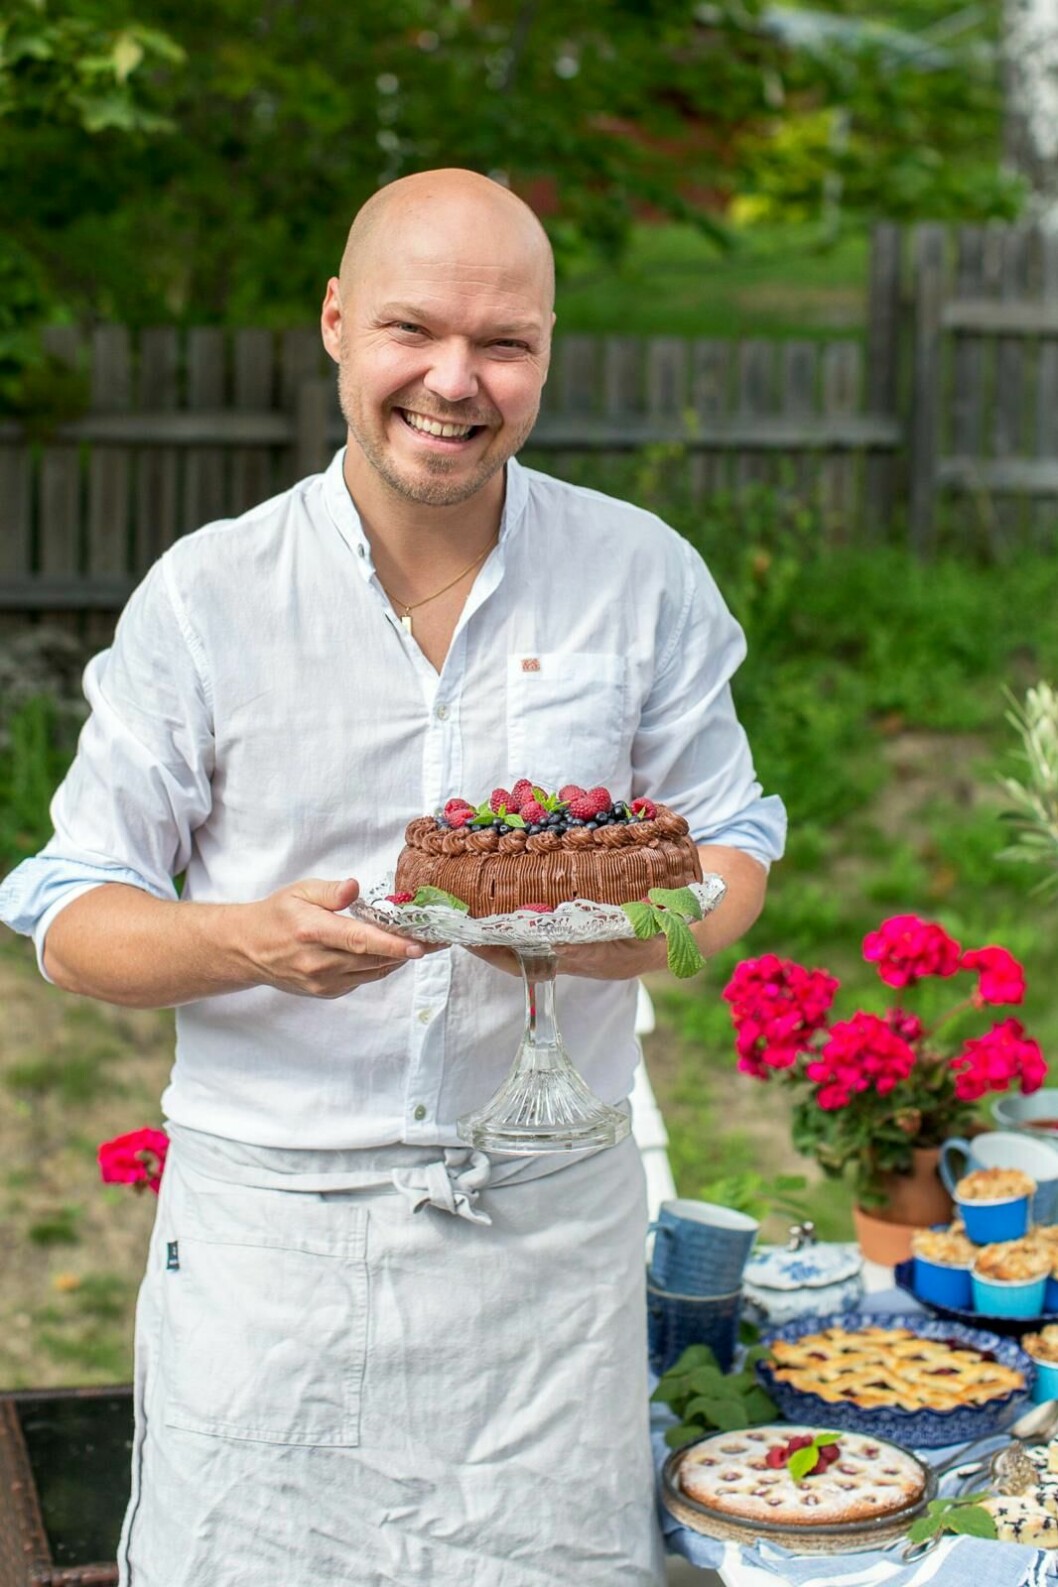 Fredrik Nylén